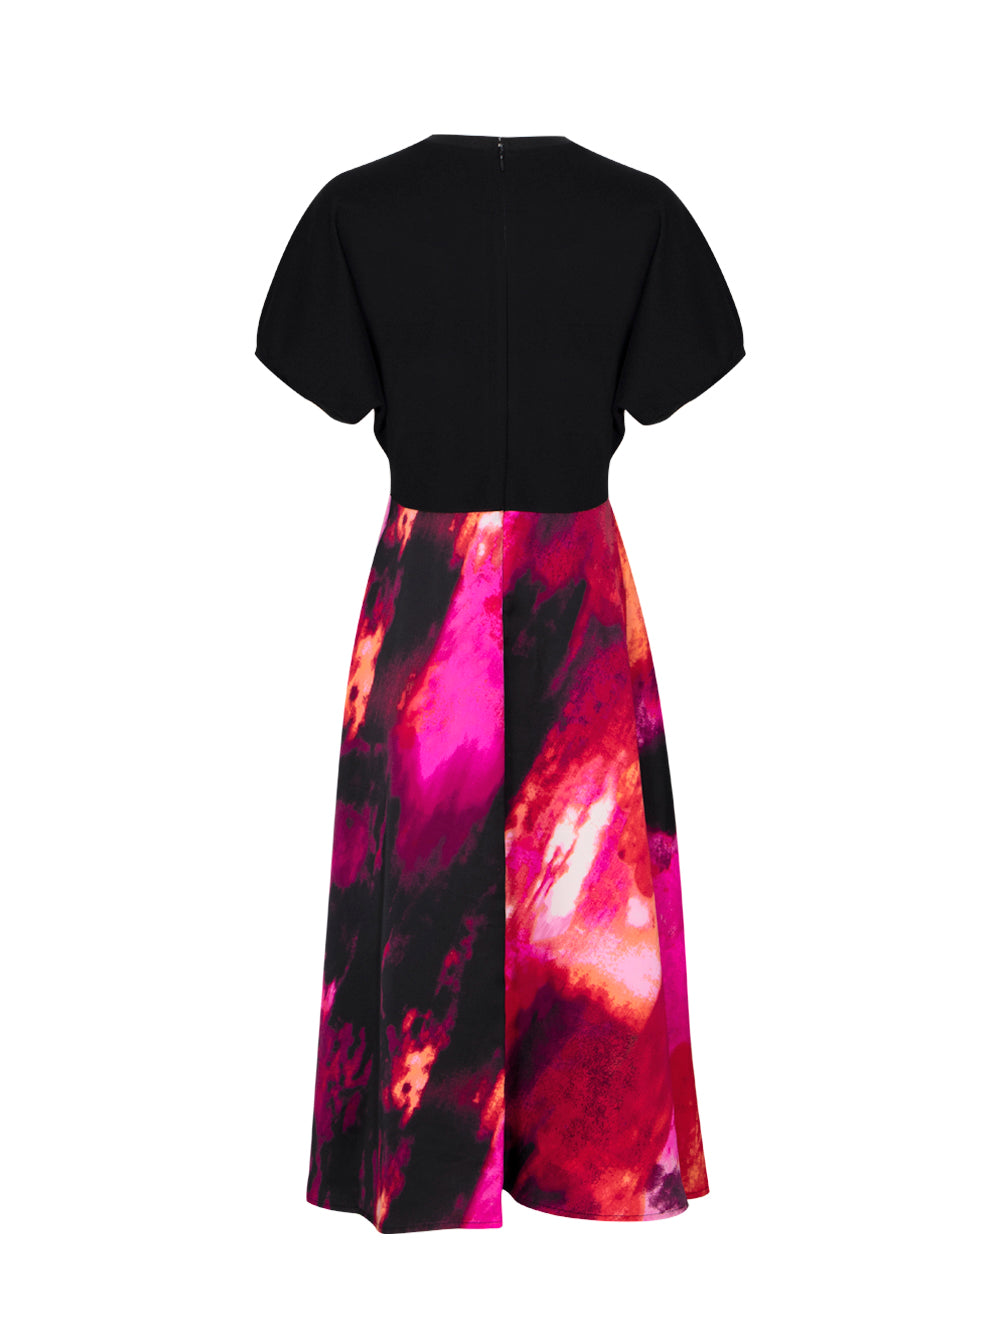 Short Sleeve Mix Media Print Satin Dress (Black/Shocking Pink Multi)